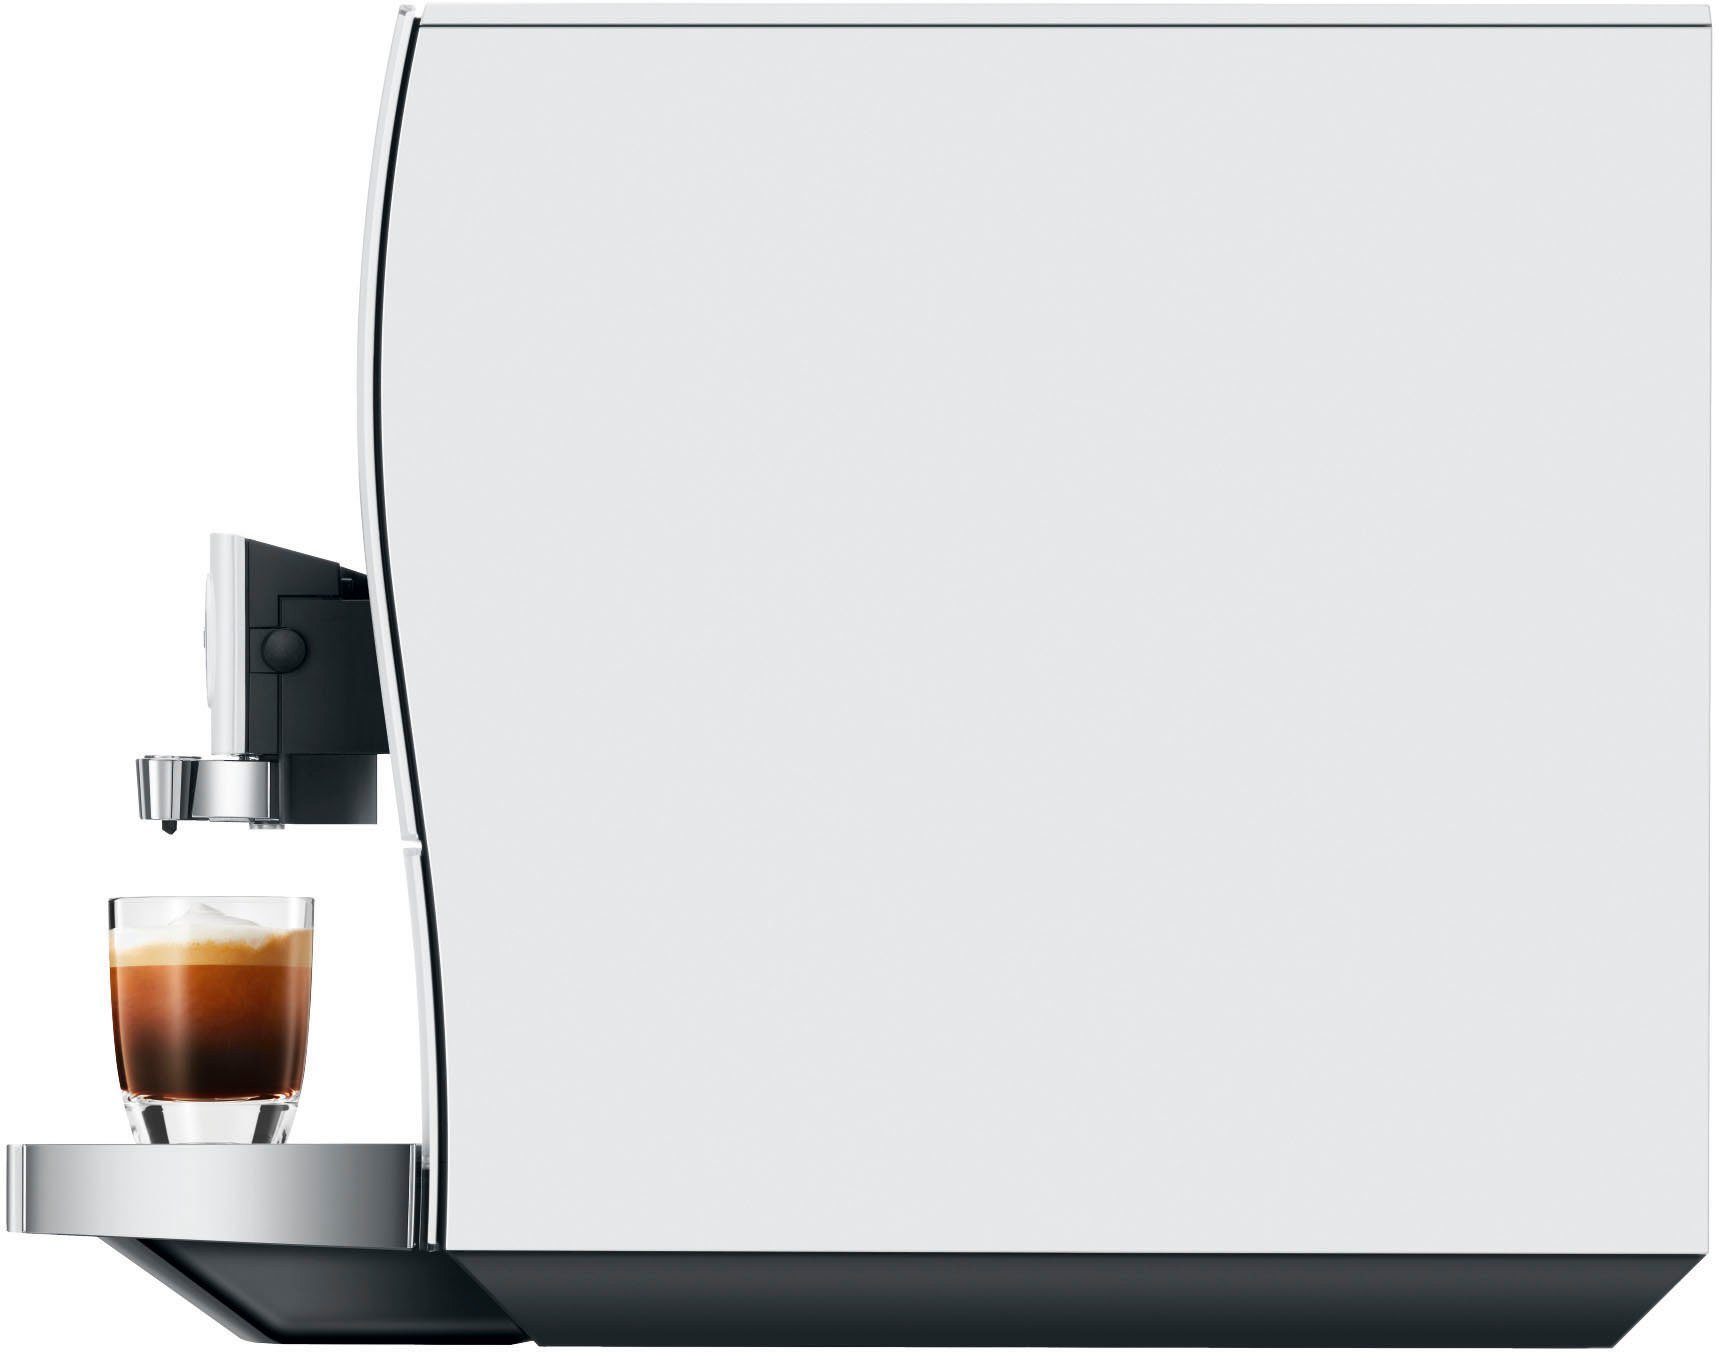 15410 (EA) Z10 White Diamond JURA Kaffeevollautomat